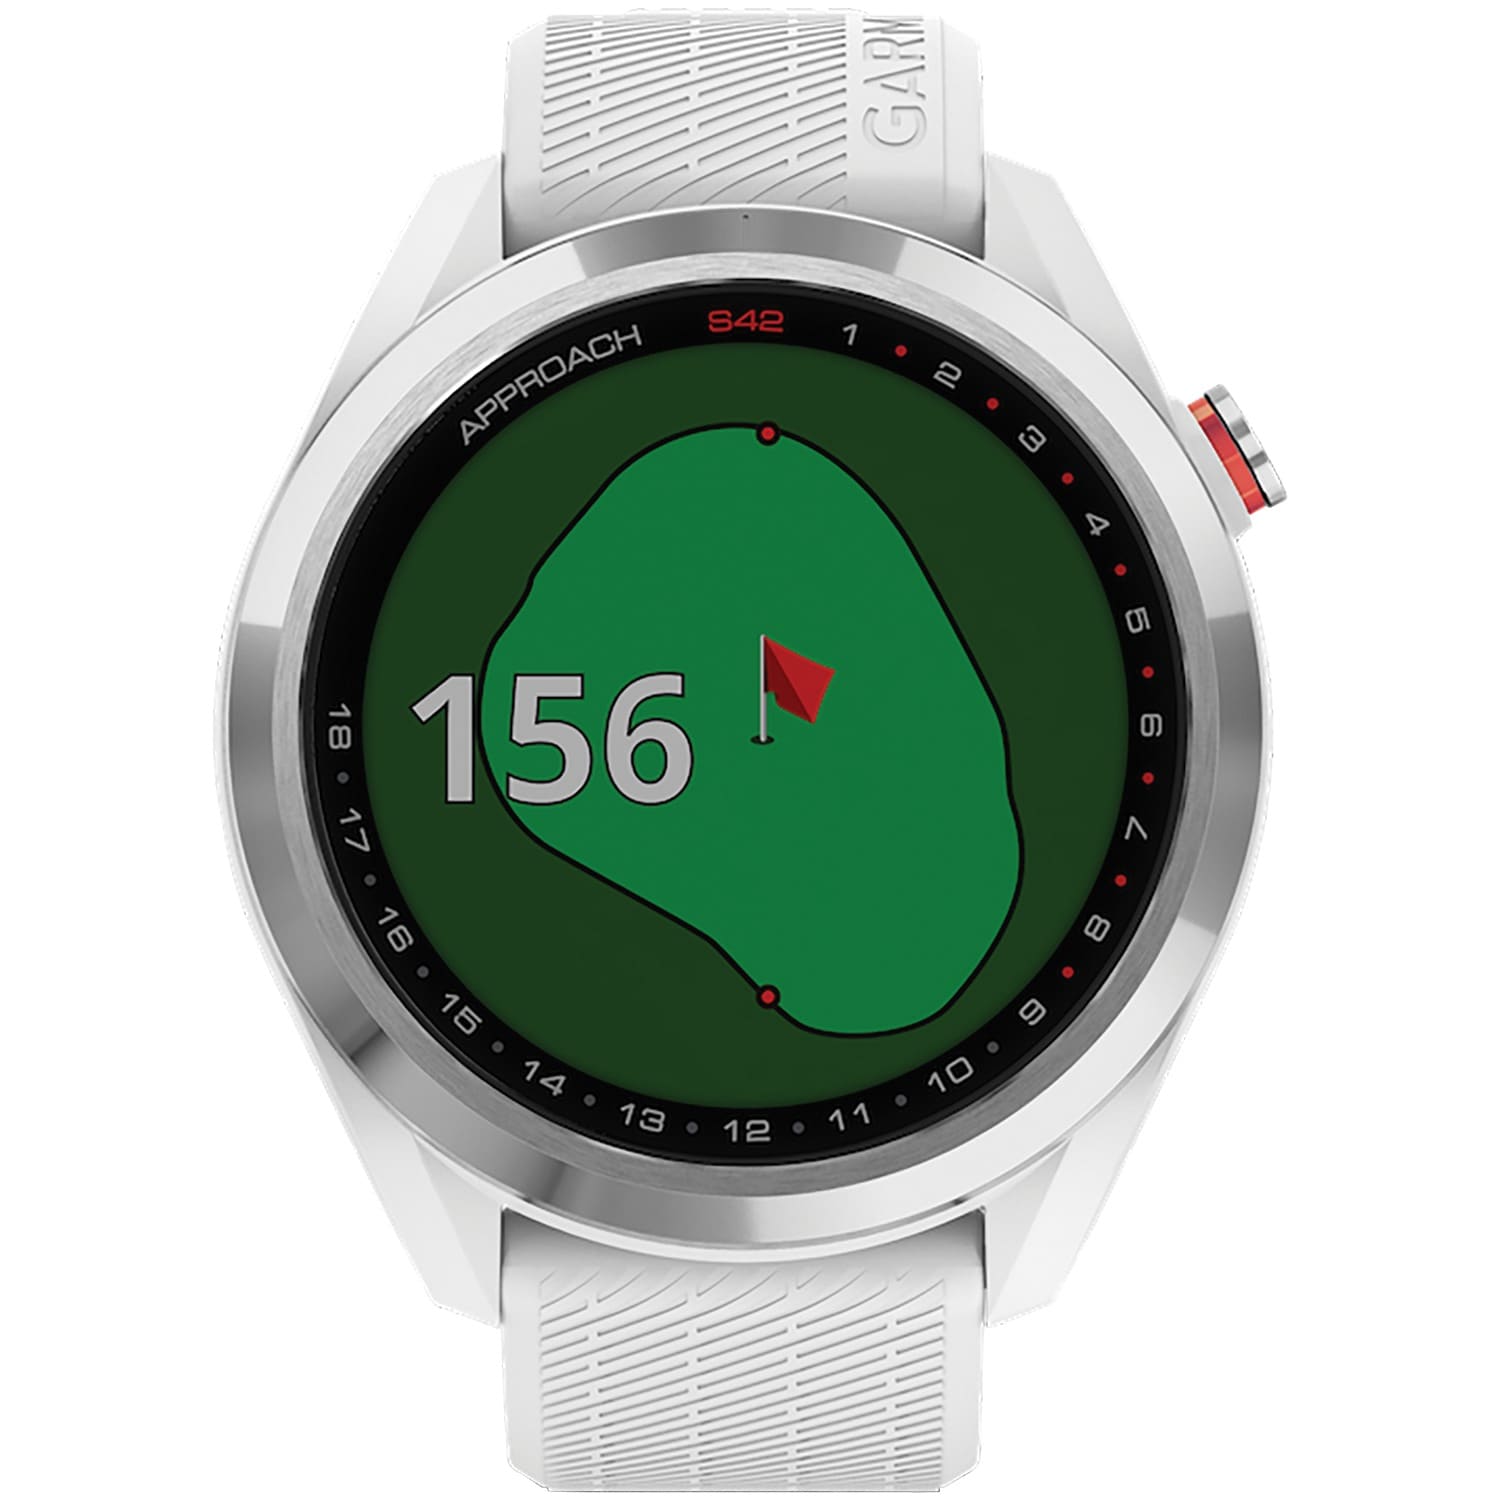 Garmin Approach S42 Golf GPS Watch - Stylish & Lightweight